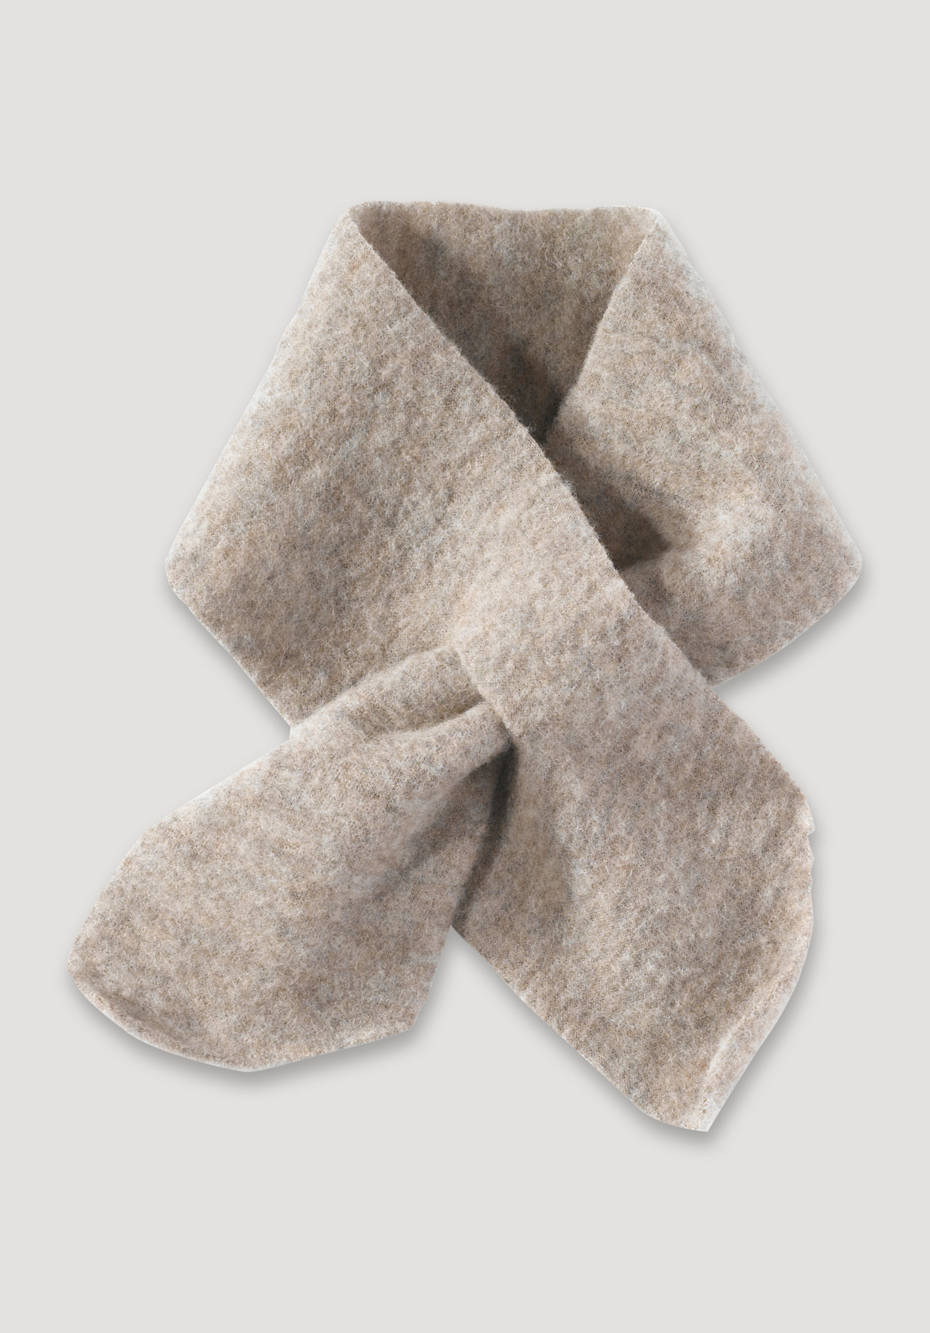 Wool fleece scarf made from pure organic merino wool